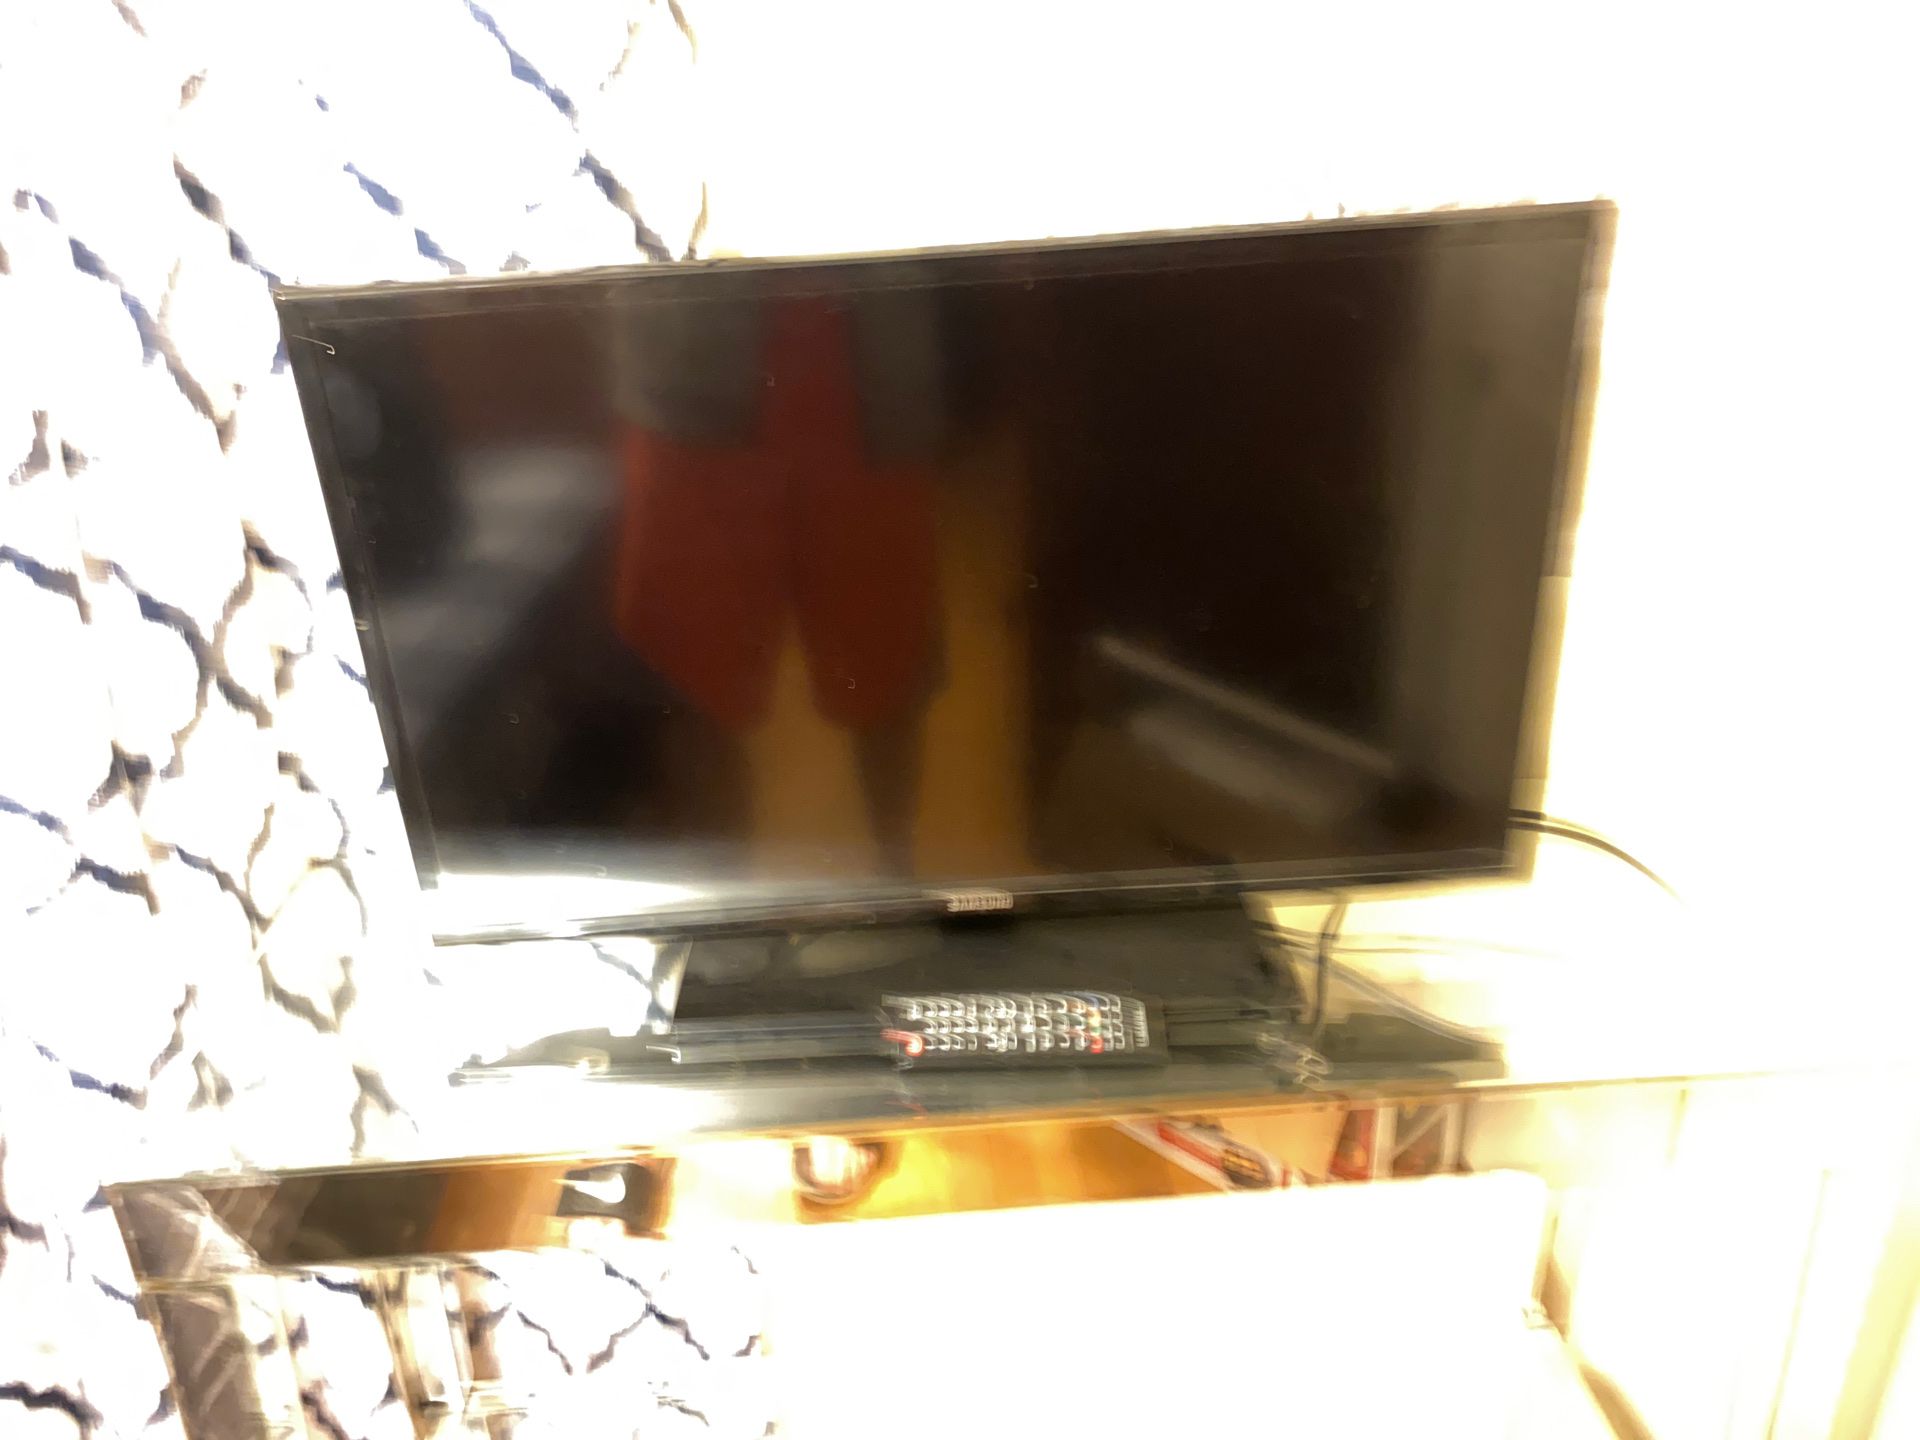 32 in Samsung TV LED HDTV 1020p not a smart tv